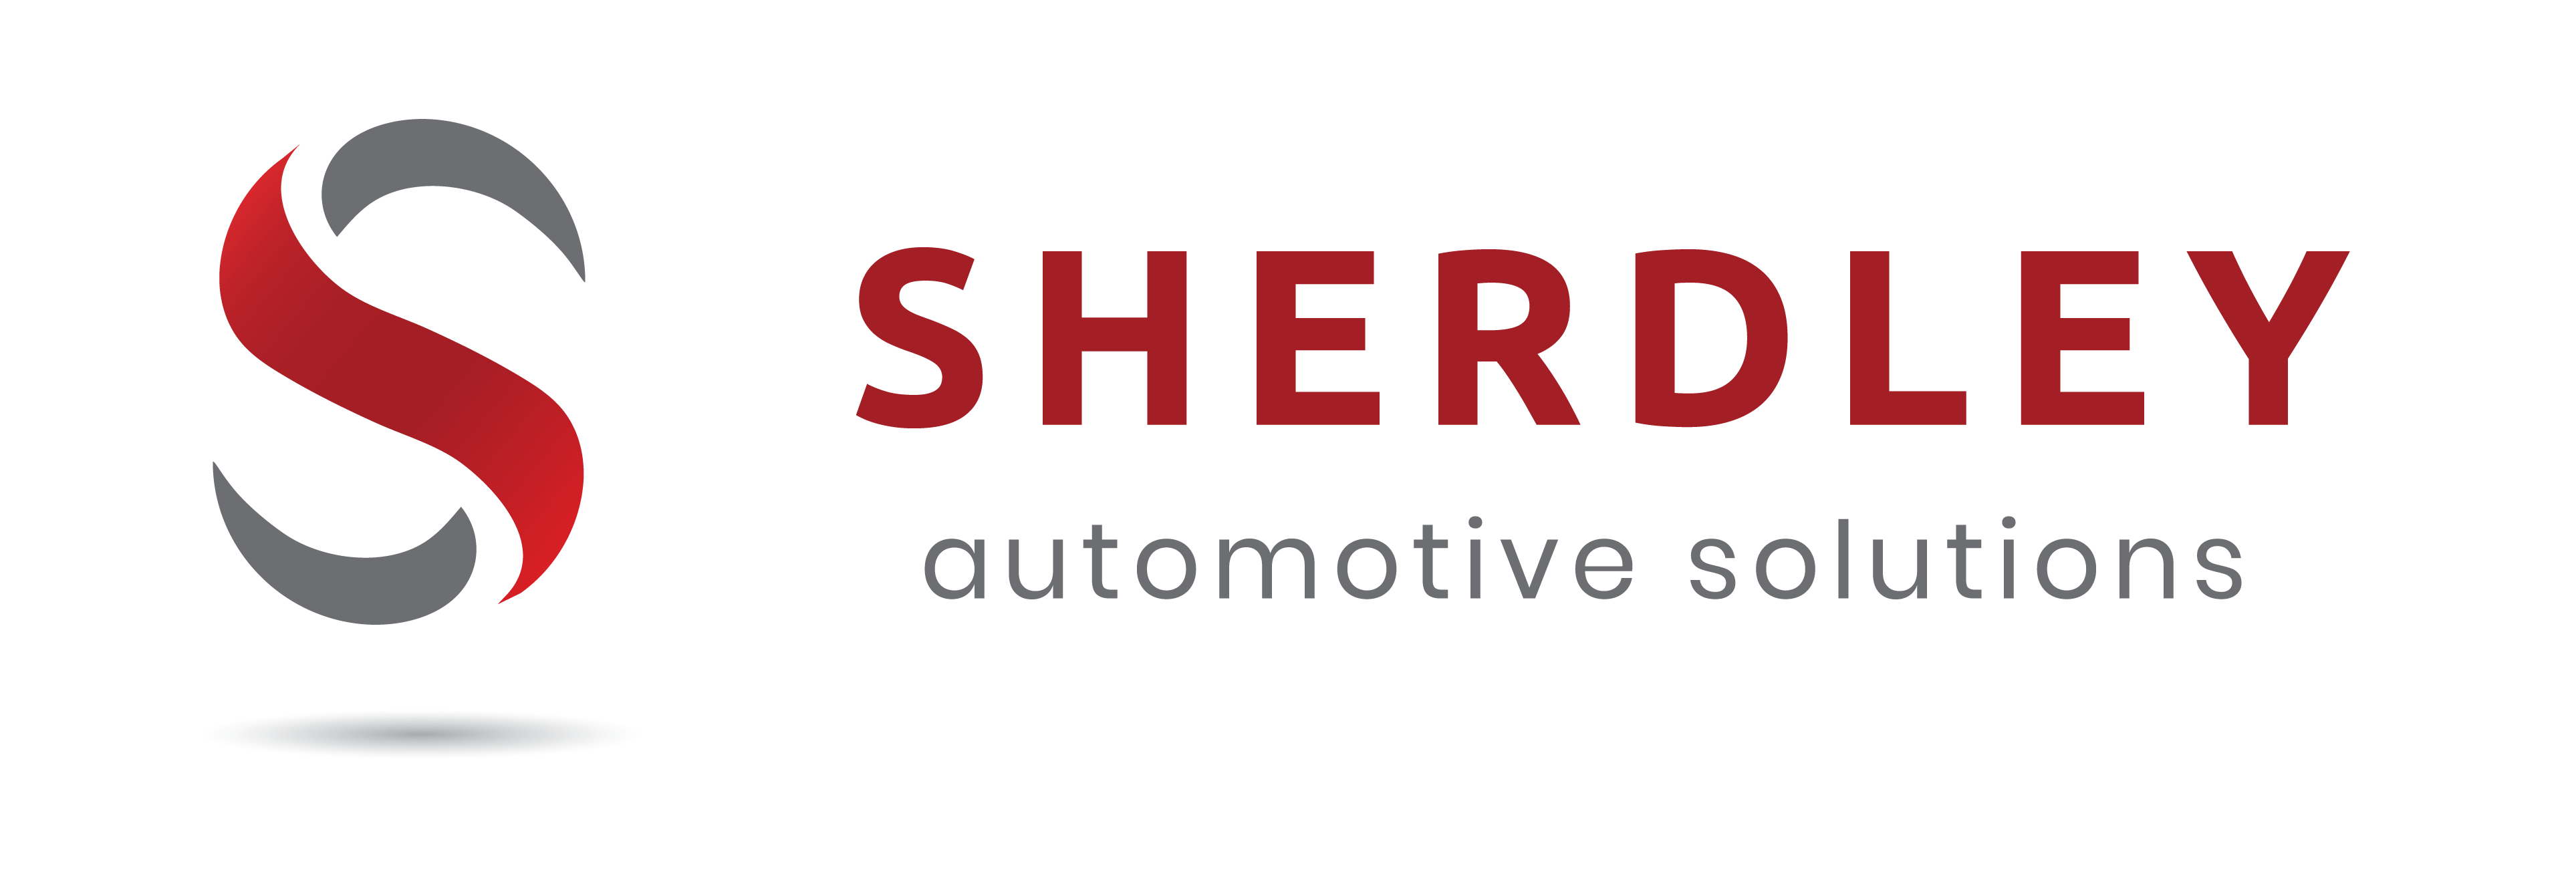 Sherdley Automotive Solutions